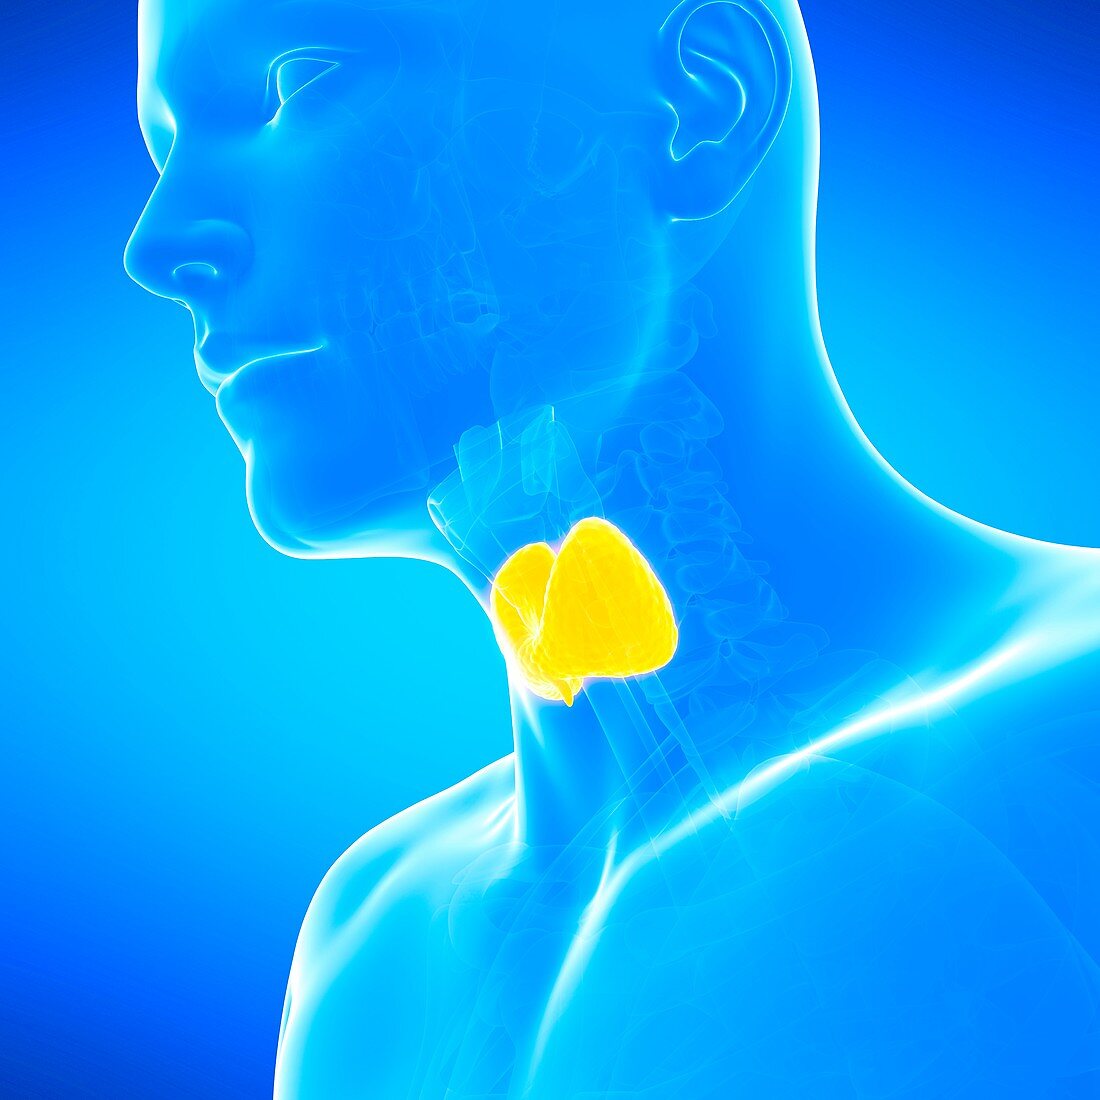 Human thyroid gland, illustration